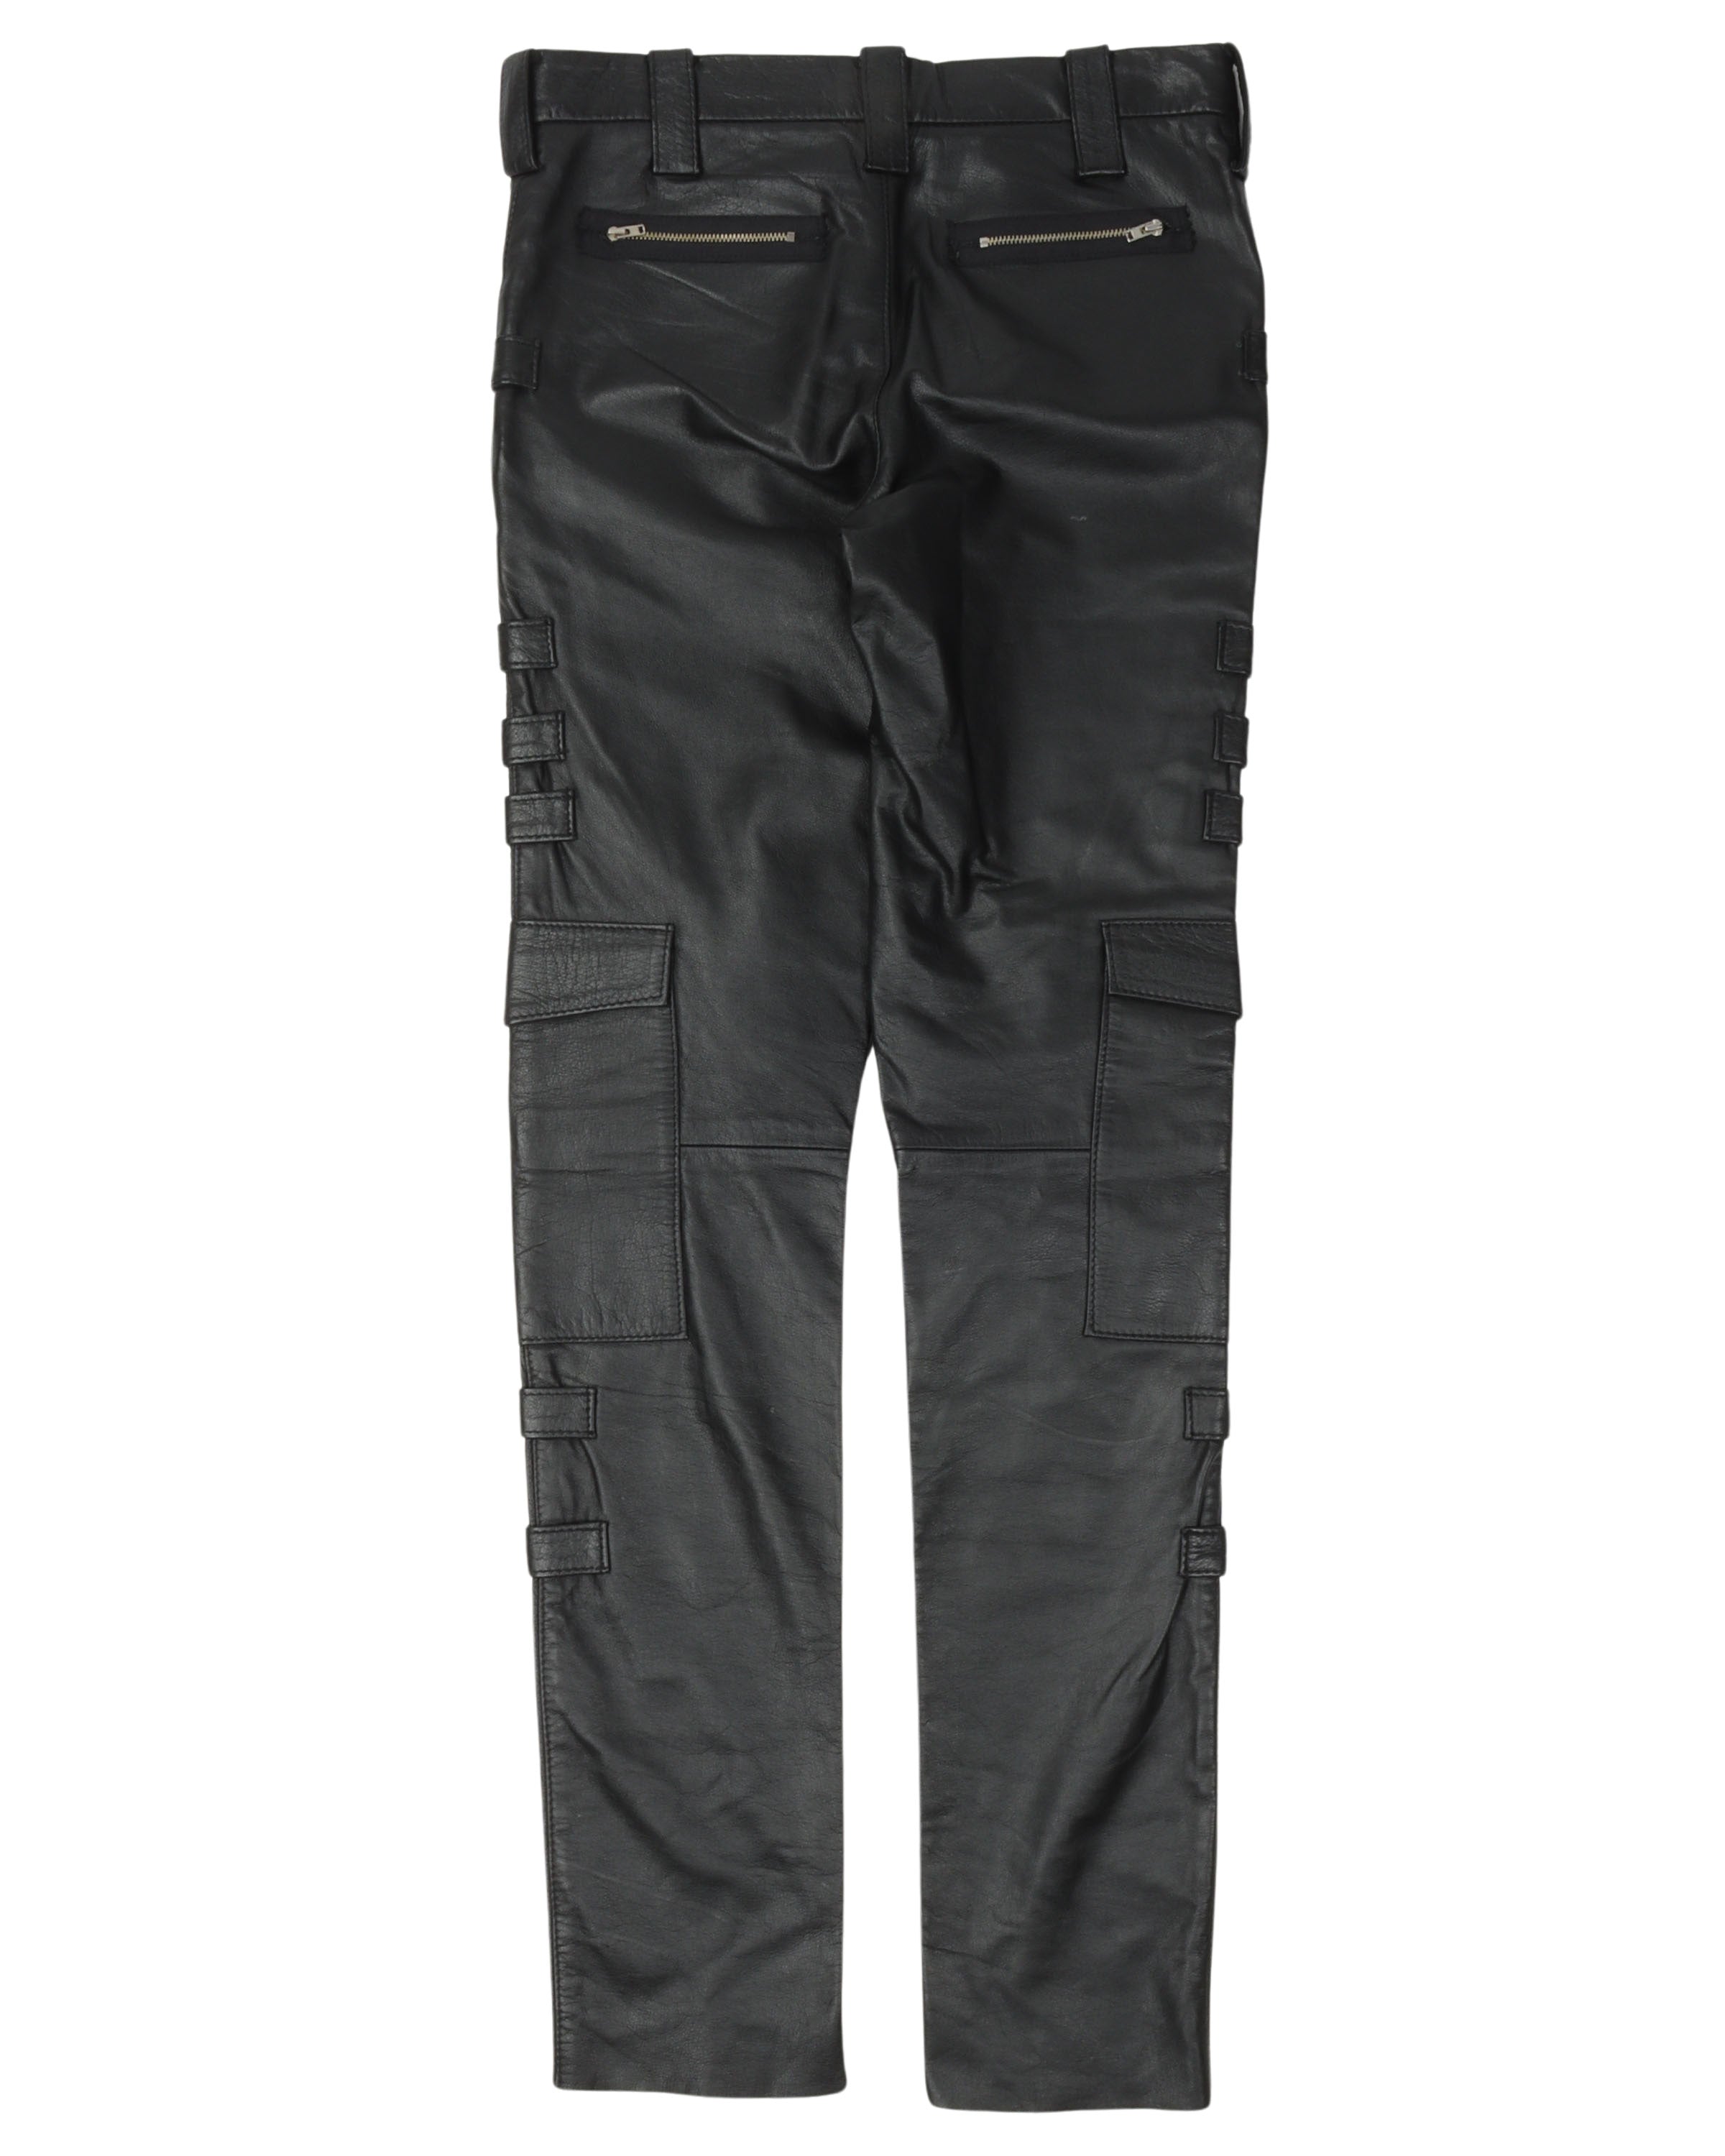 AW98 "Radioactivity" Leather Cargo Pants